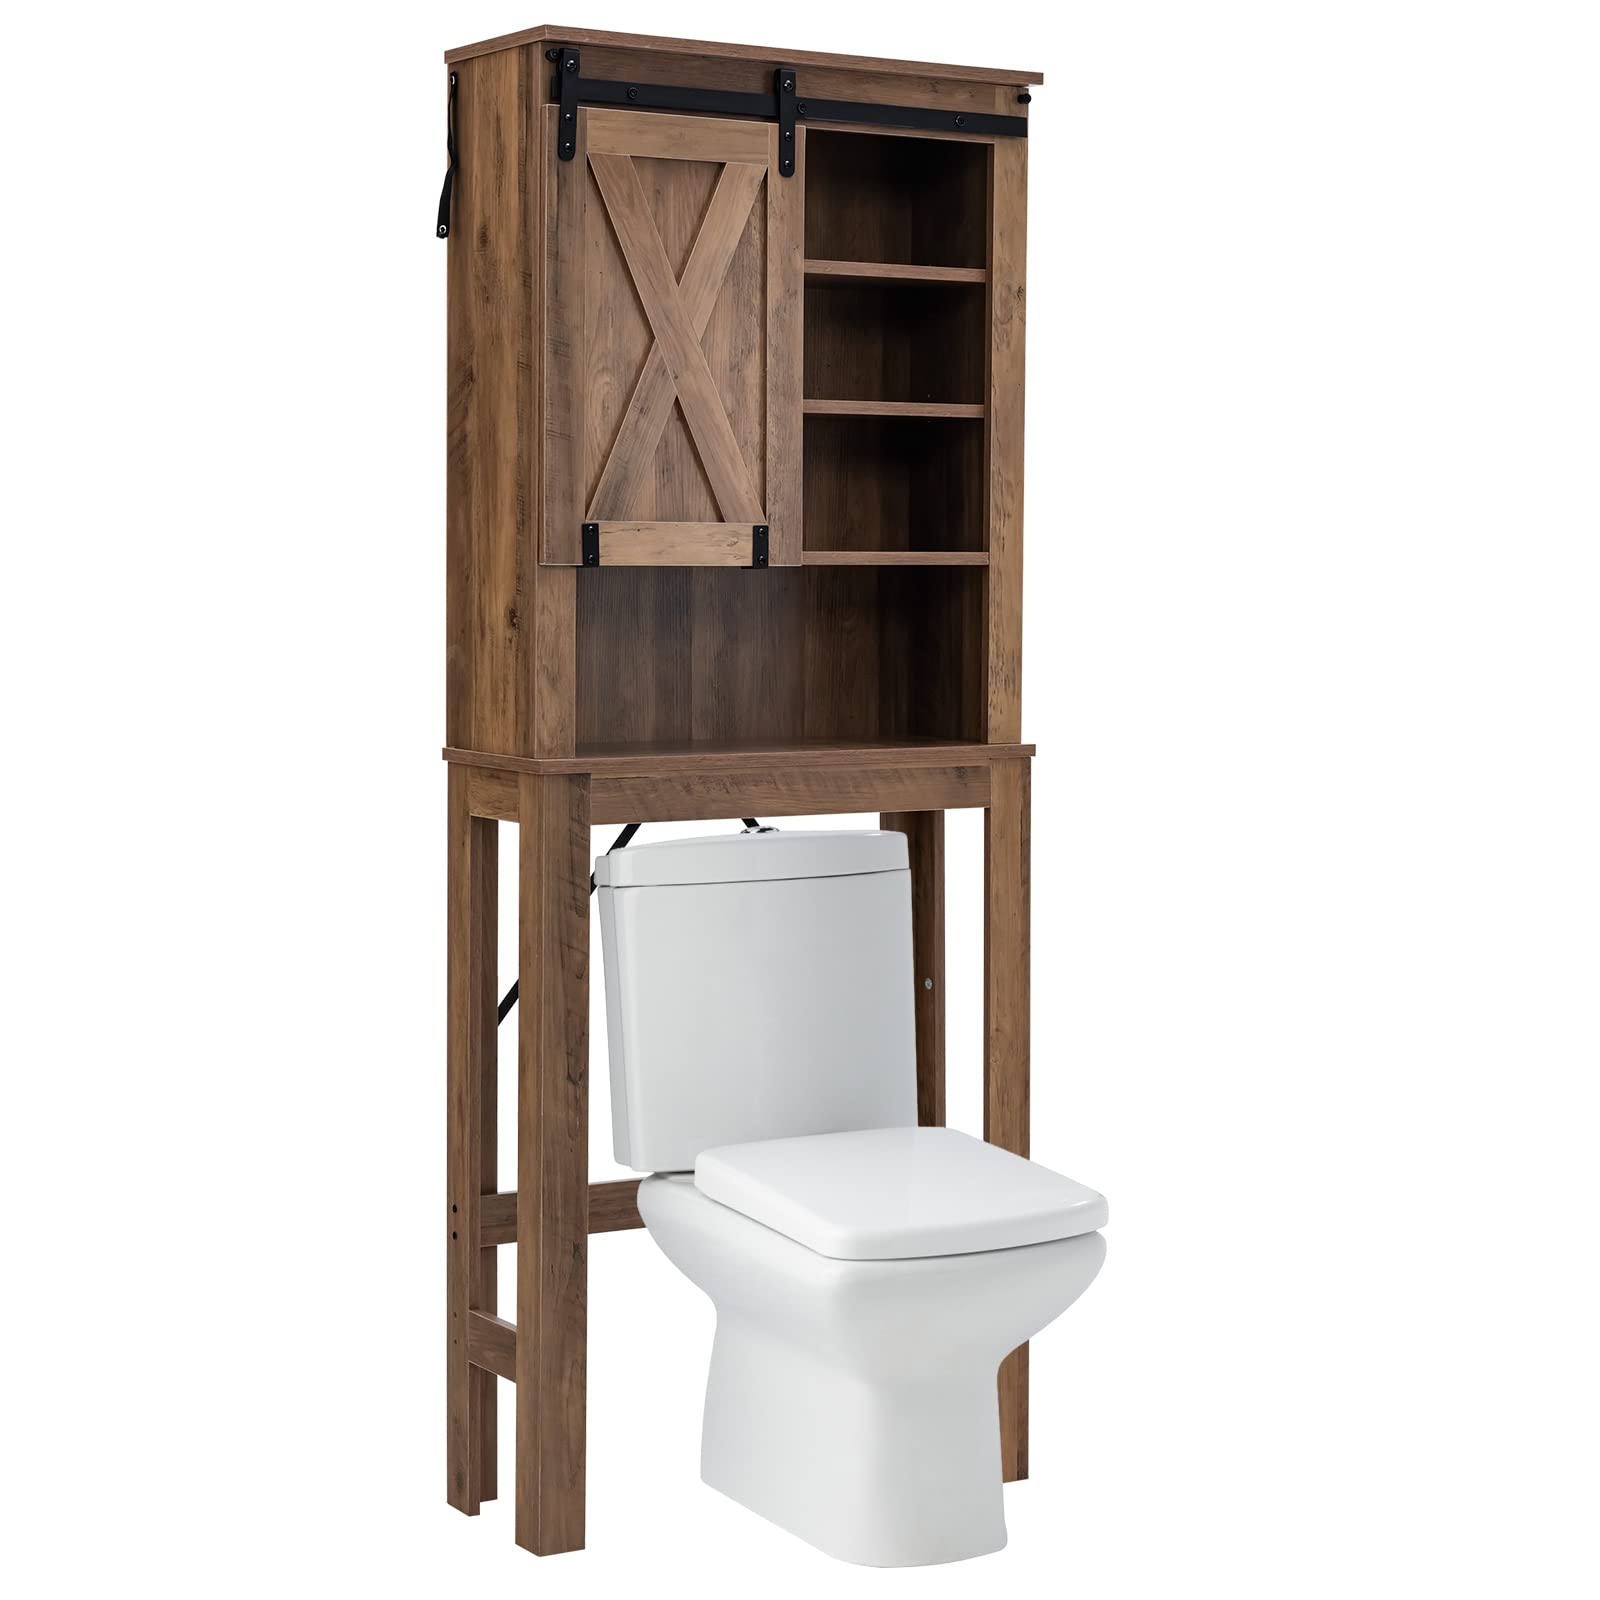 Giantex Over The Toilet Storage Cabinet - Freestanding Toilet Rack